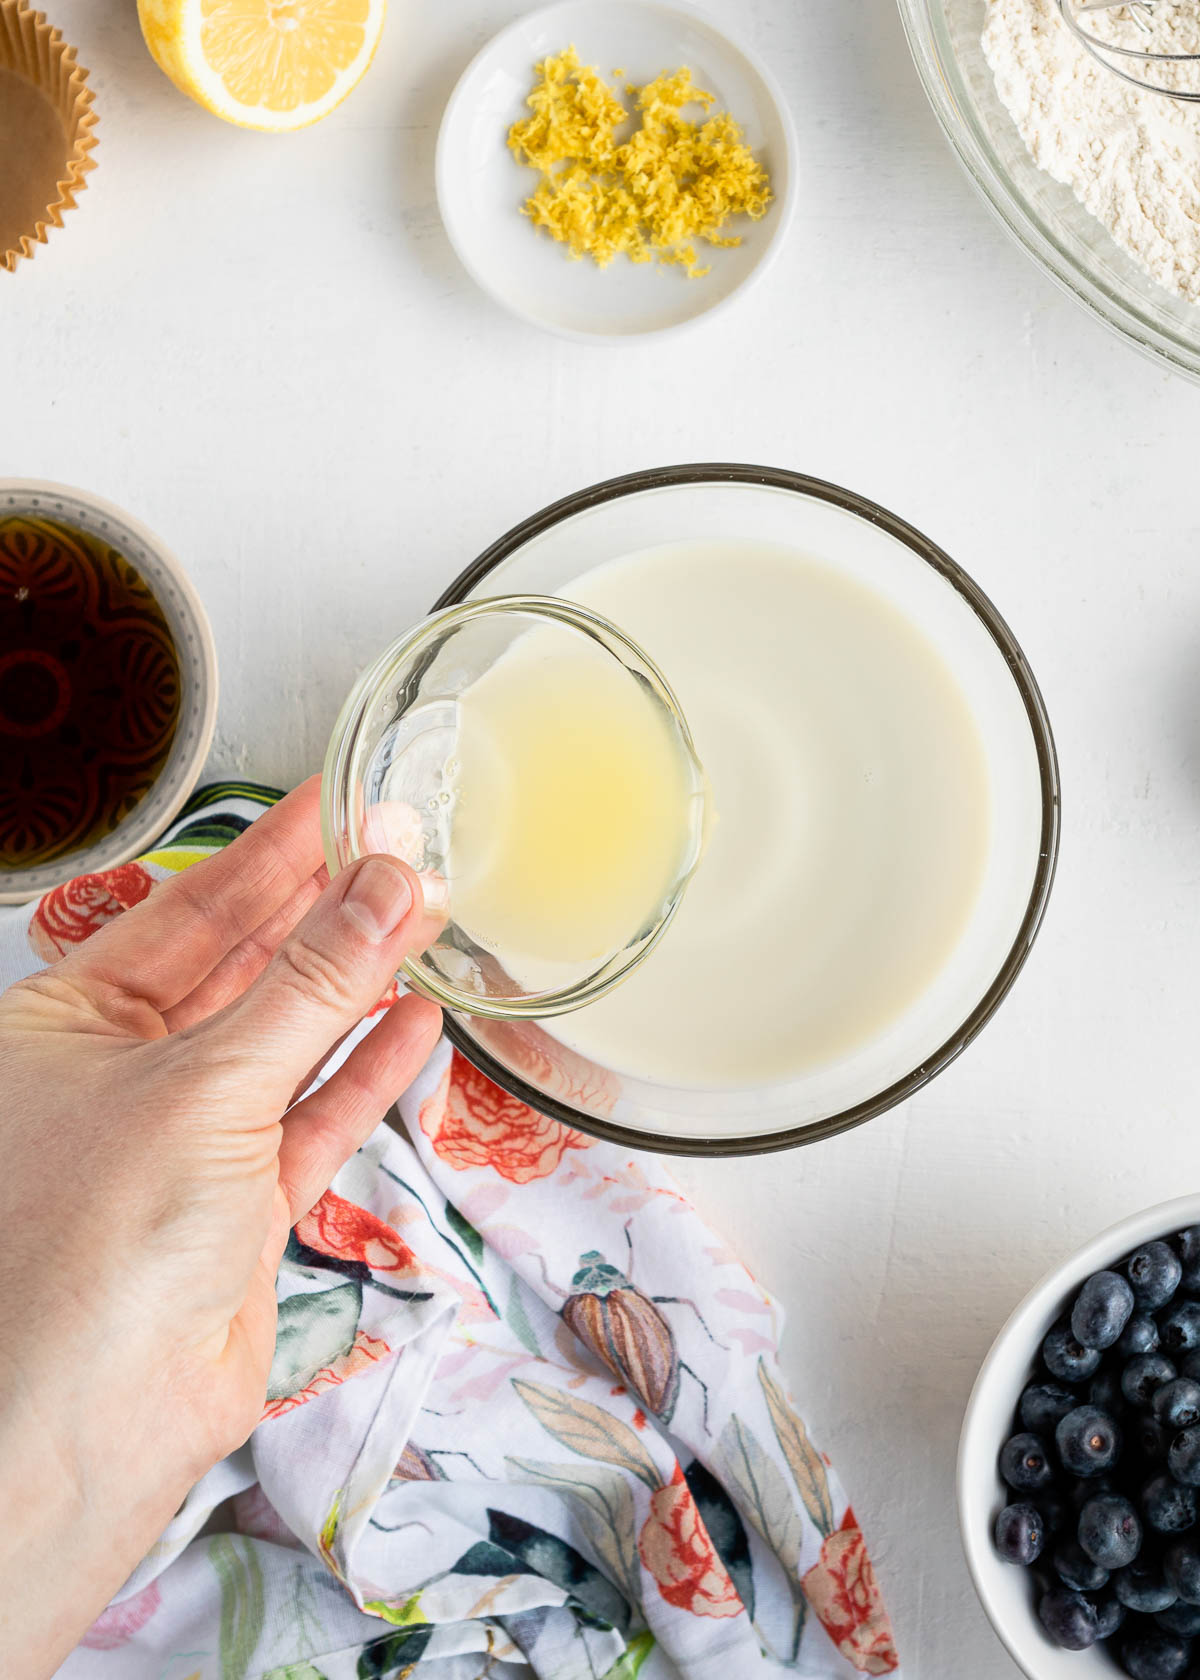 pouring lemon juice into oat milk to create vegan buttermilk.